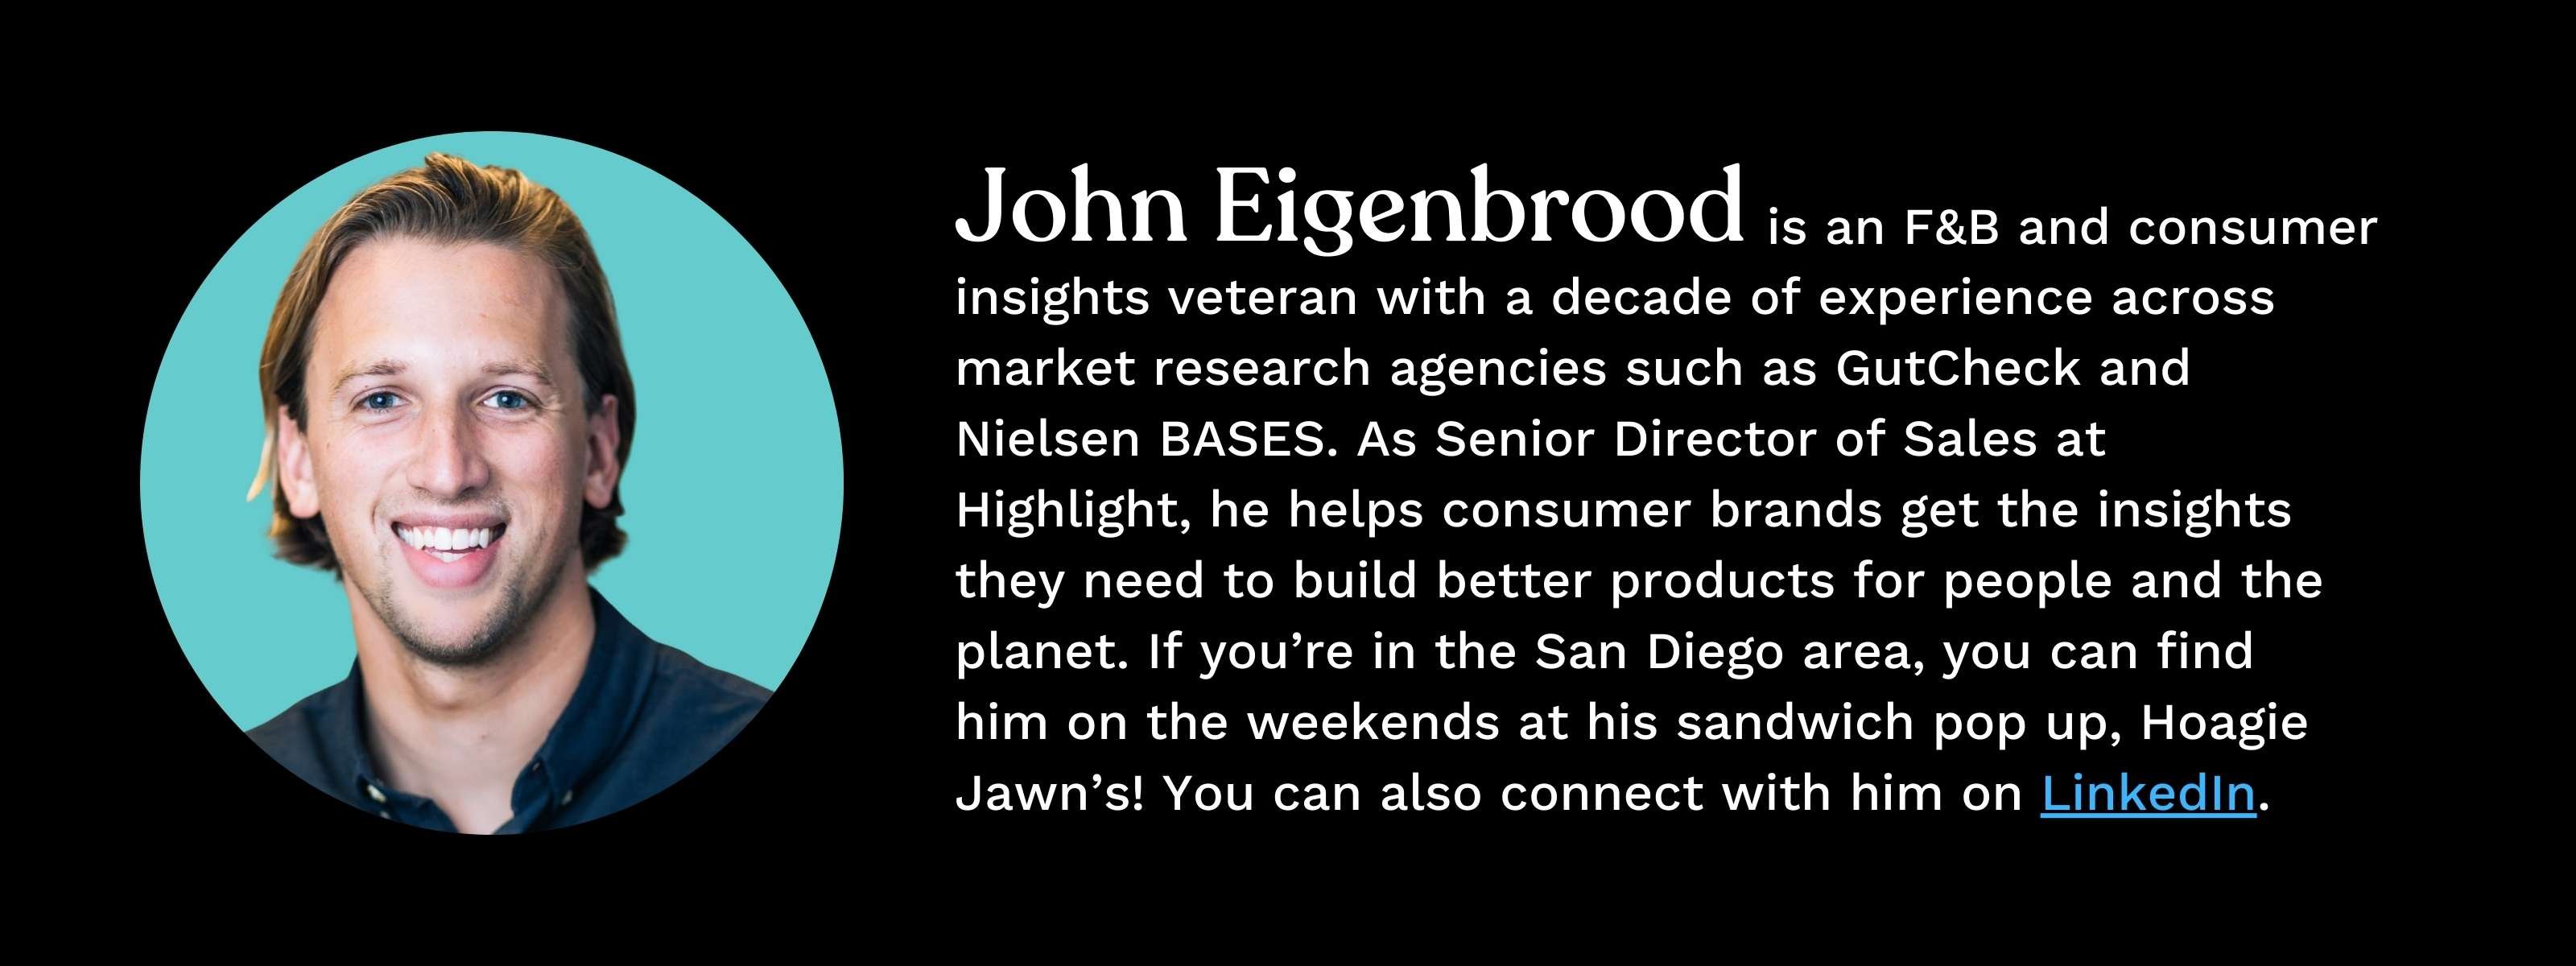 John E bio for blogs